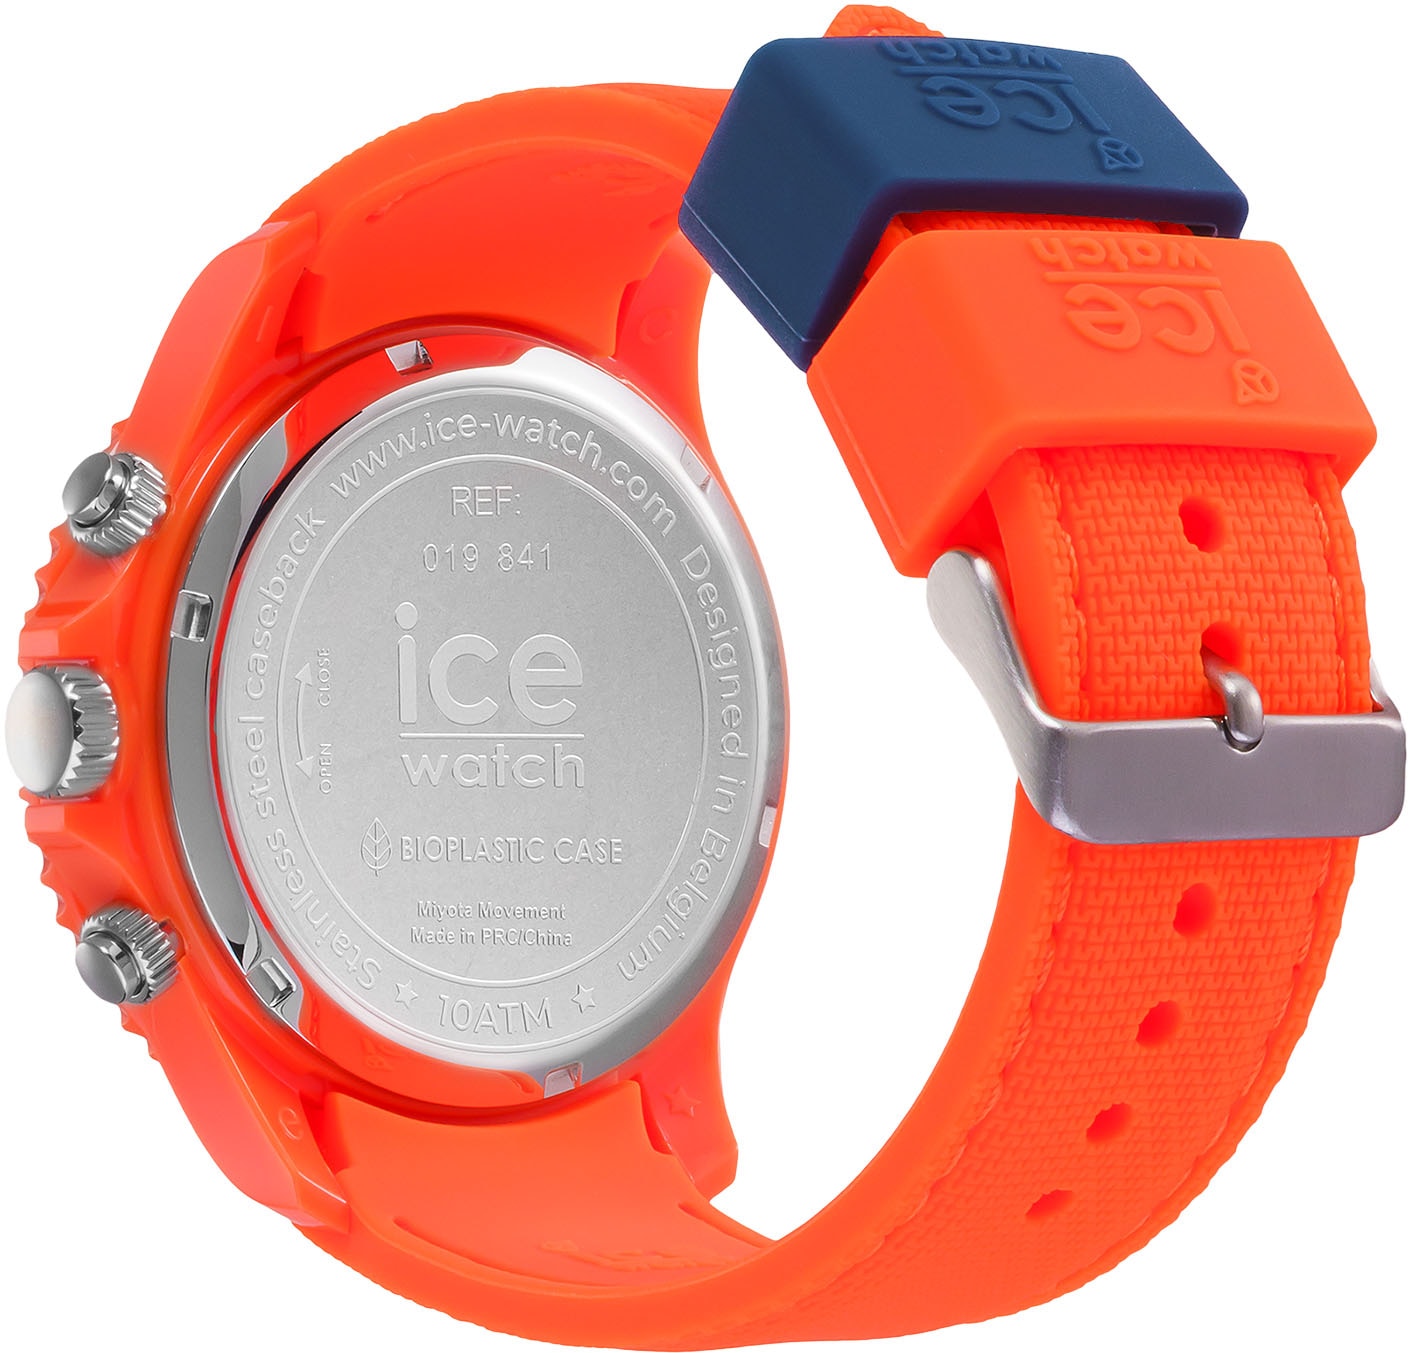 ice-watch Chronograph »ICE chrono - bei CH, - 019841« Large ♕ Orange blue 